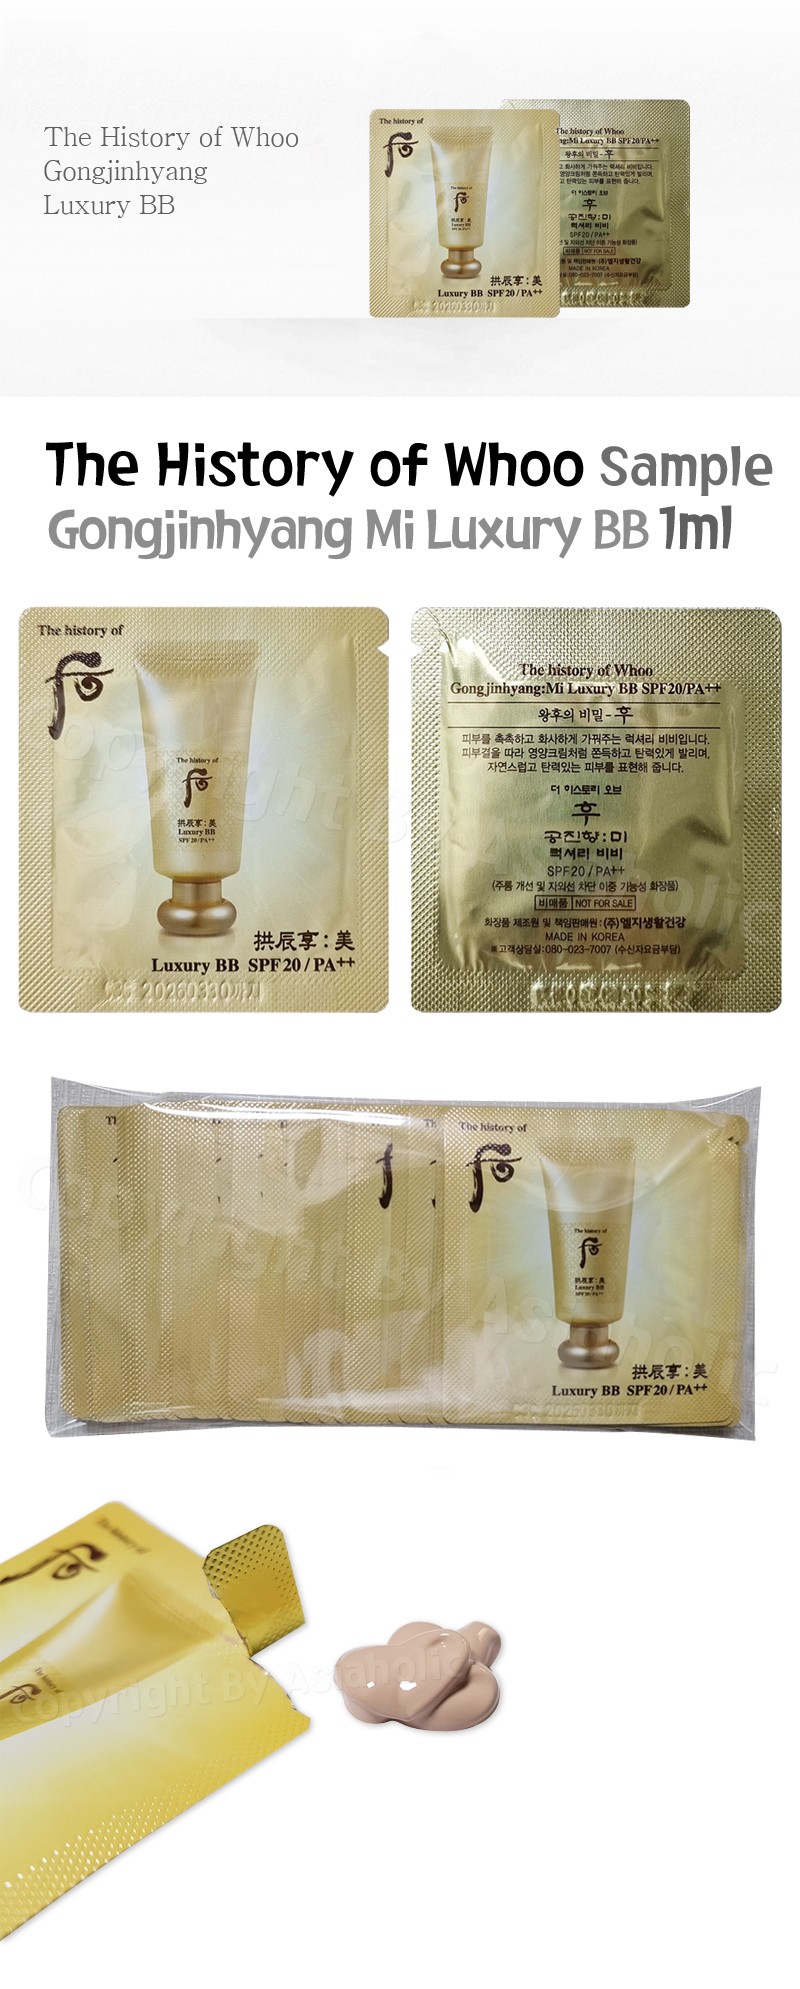 The history of Whoo Gongjinhyang:Mi Luxury BB Cream 1ml x 45pcs (45ml) SPA 20 / PA++ Sample Newest Version